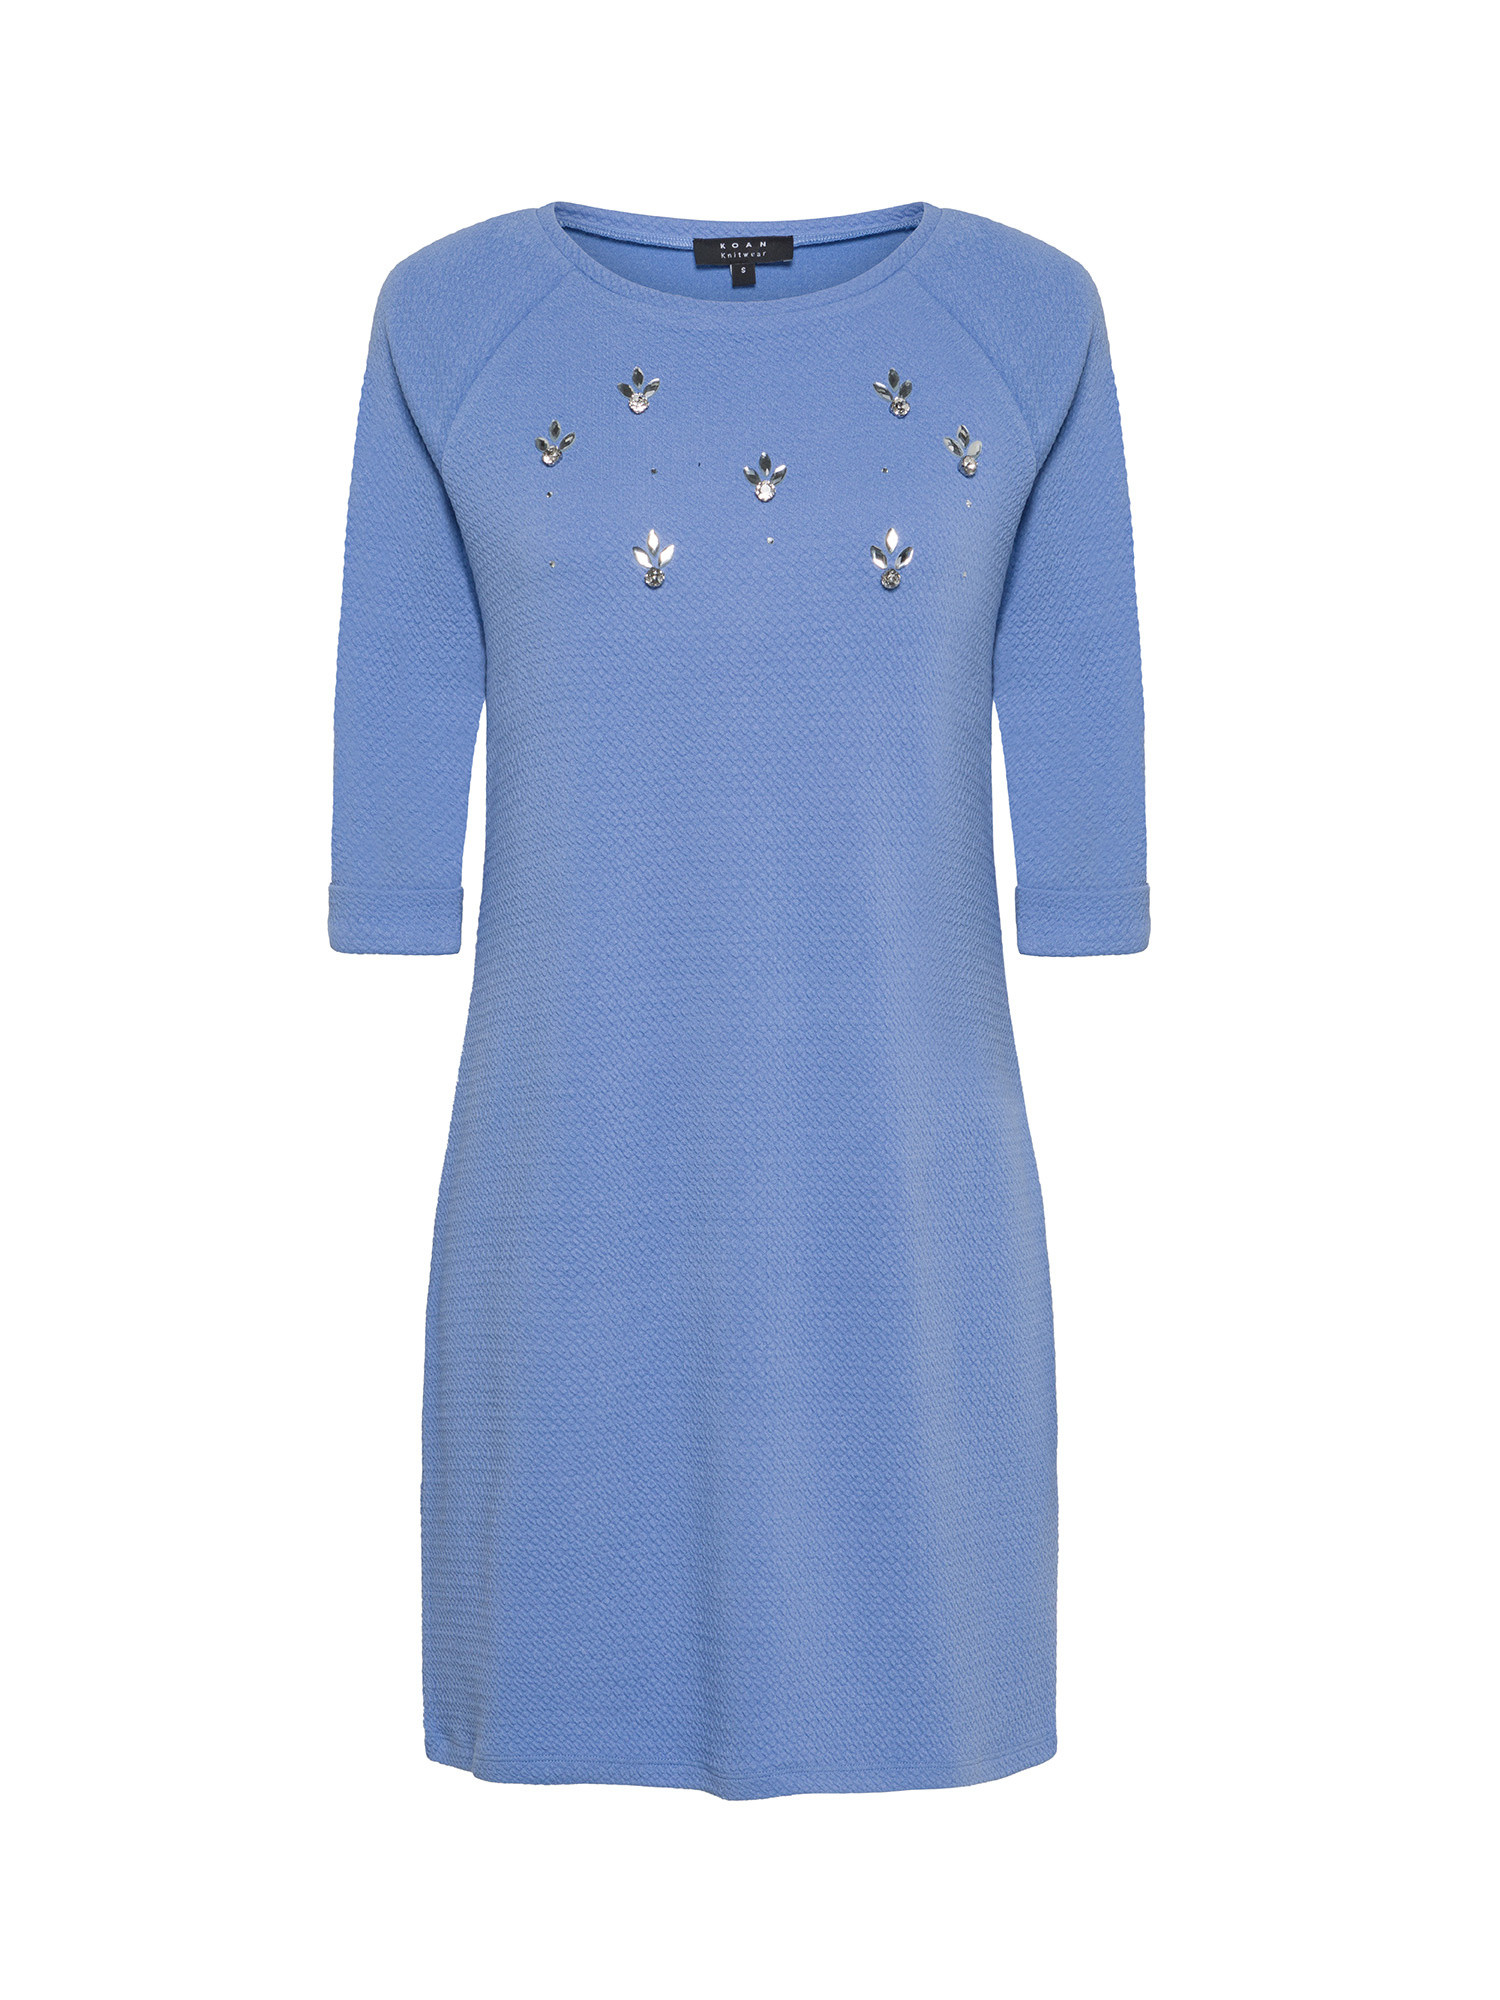 Koan - Dress with rhinestones, Light Blue, large image number 0